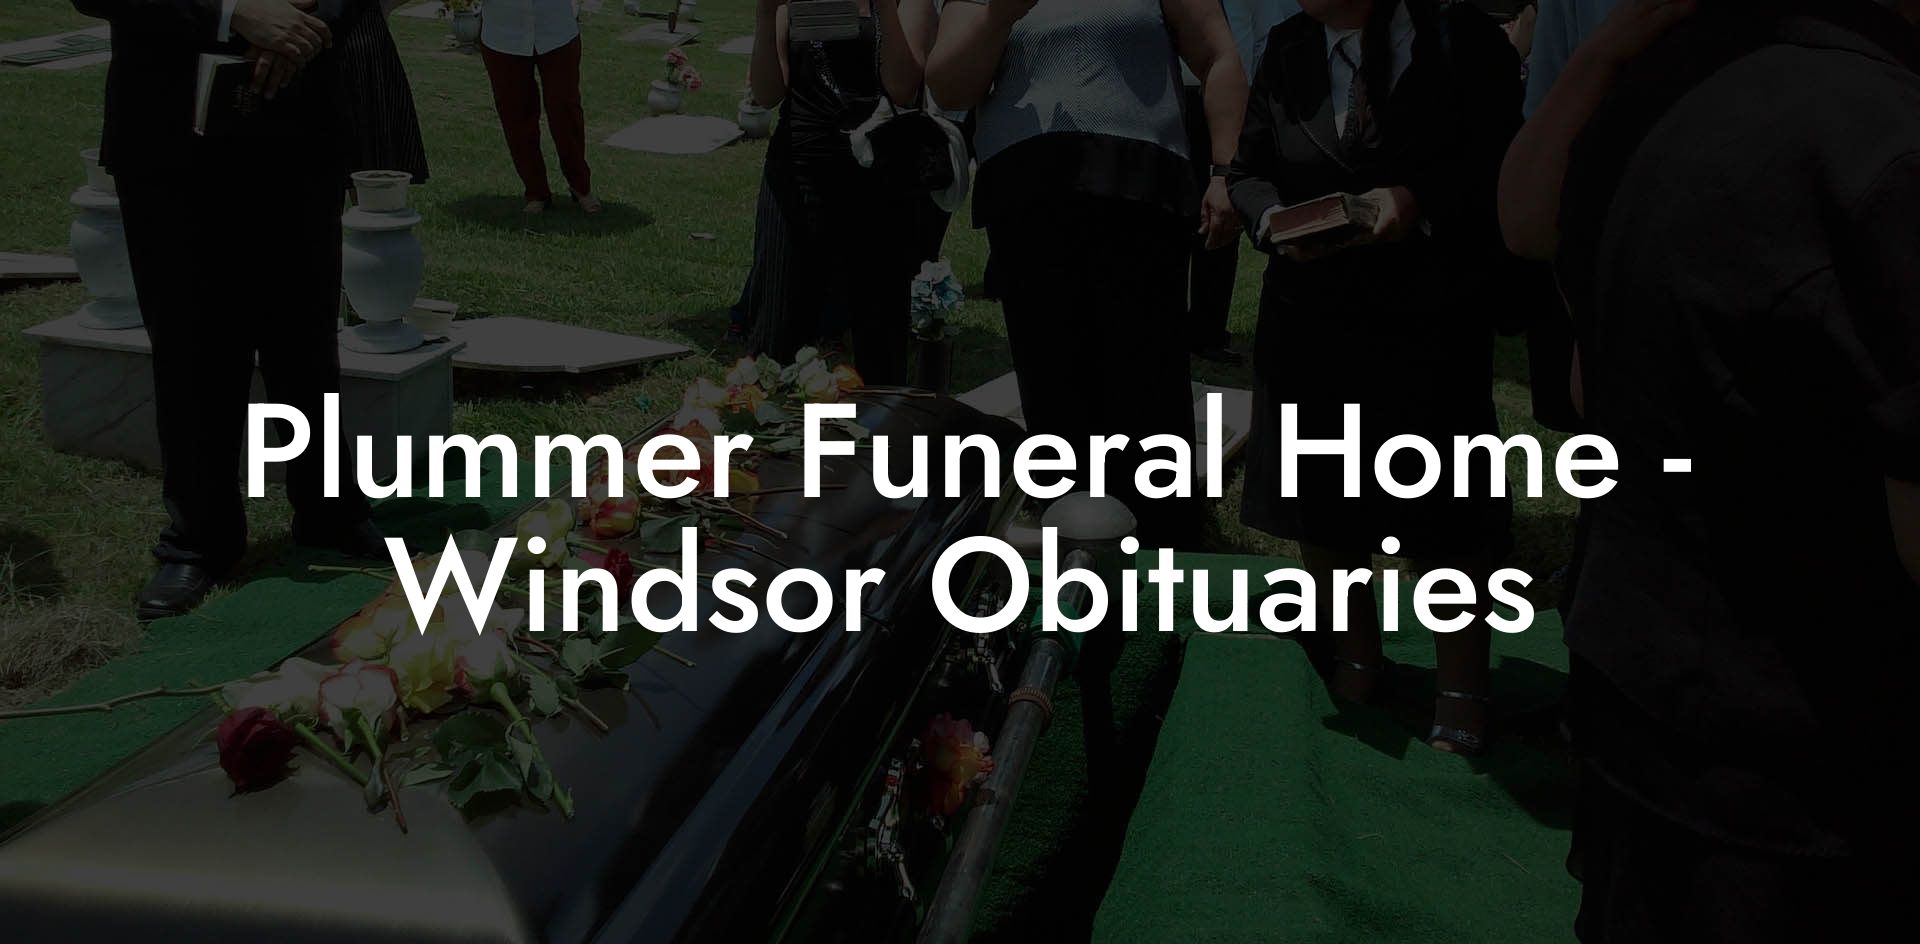 Plummer Funeral Home - Windsor Obituaries